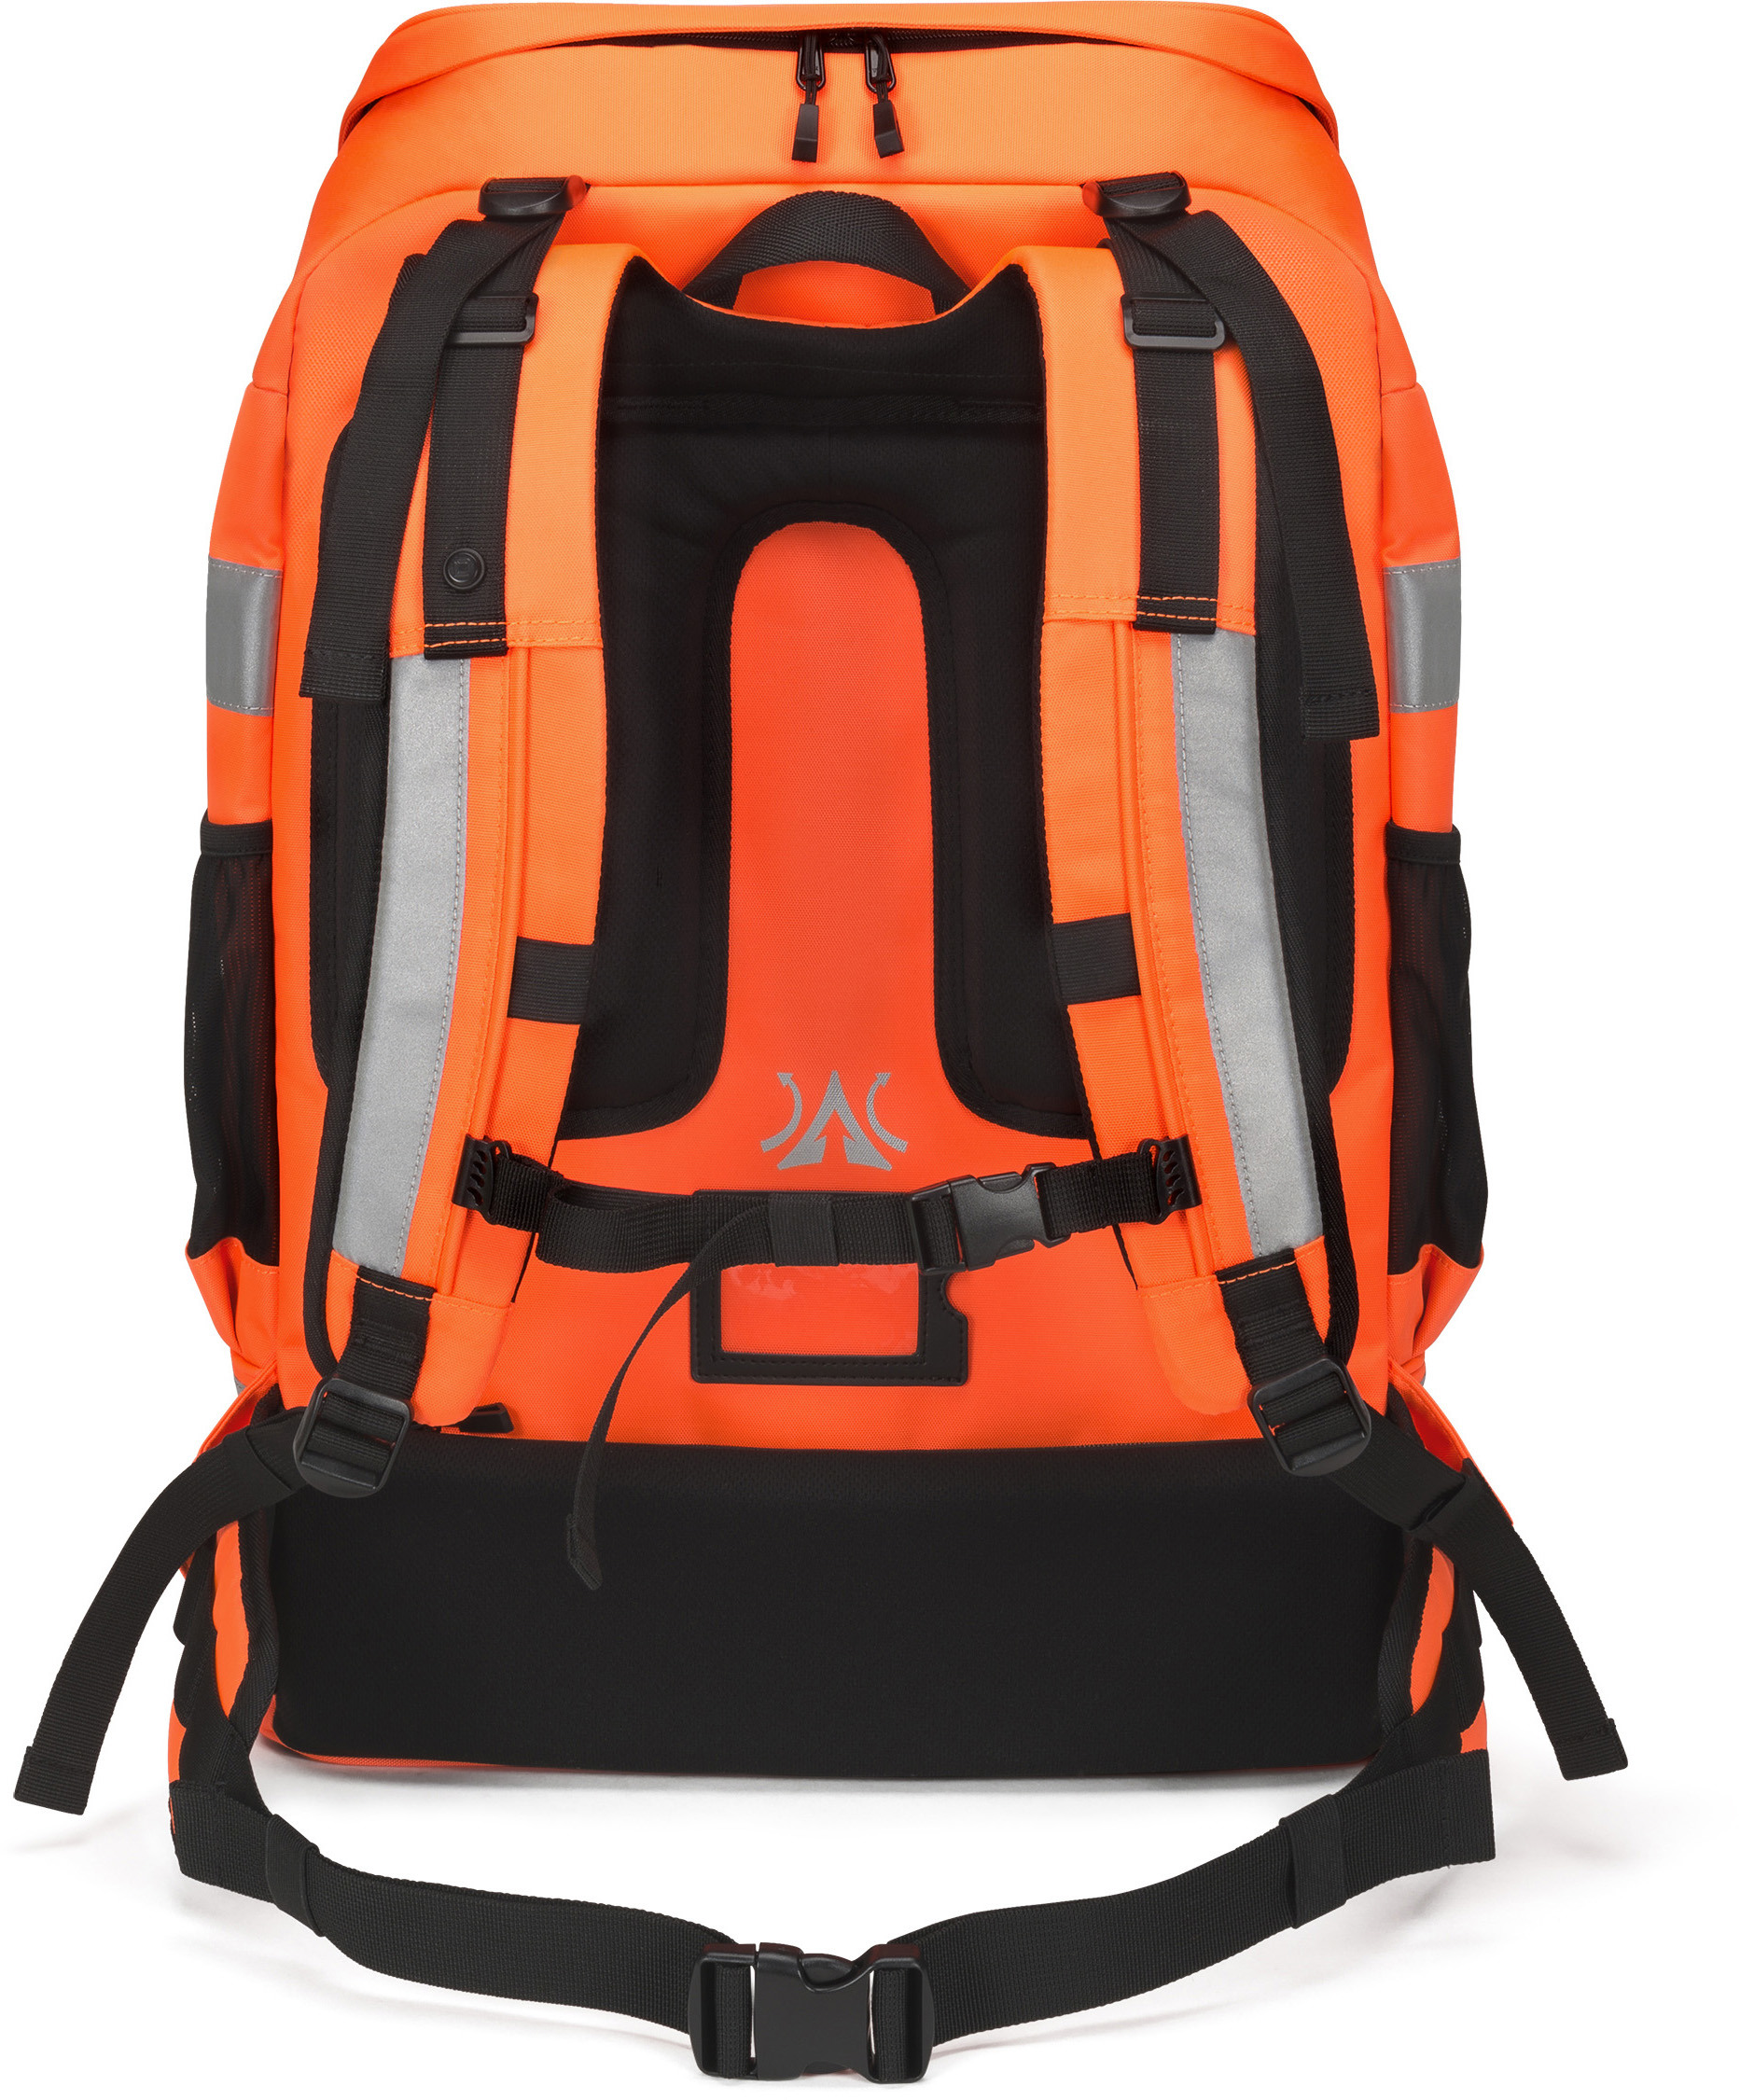 DICOTA Backpack HI-VIS 65 litre P20471-08 orange